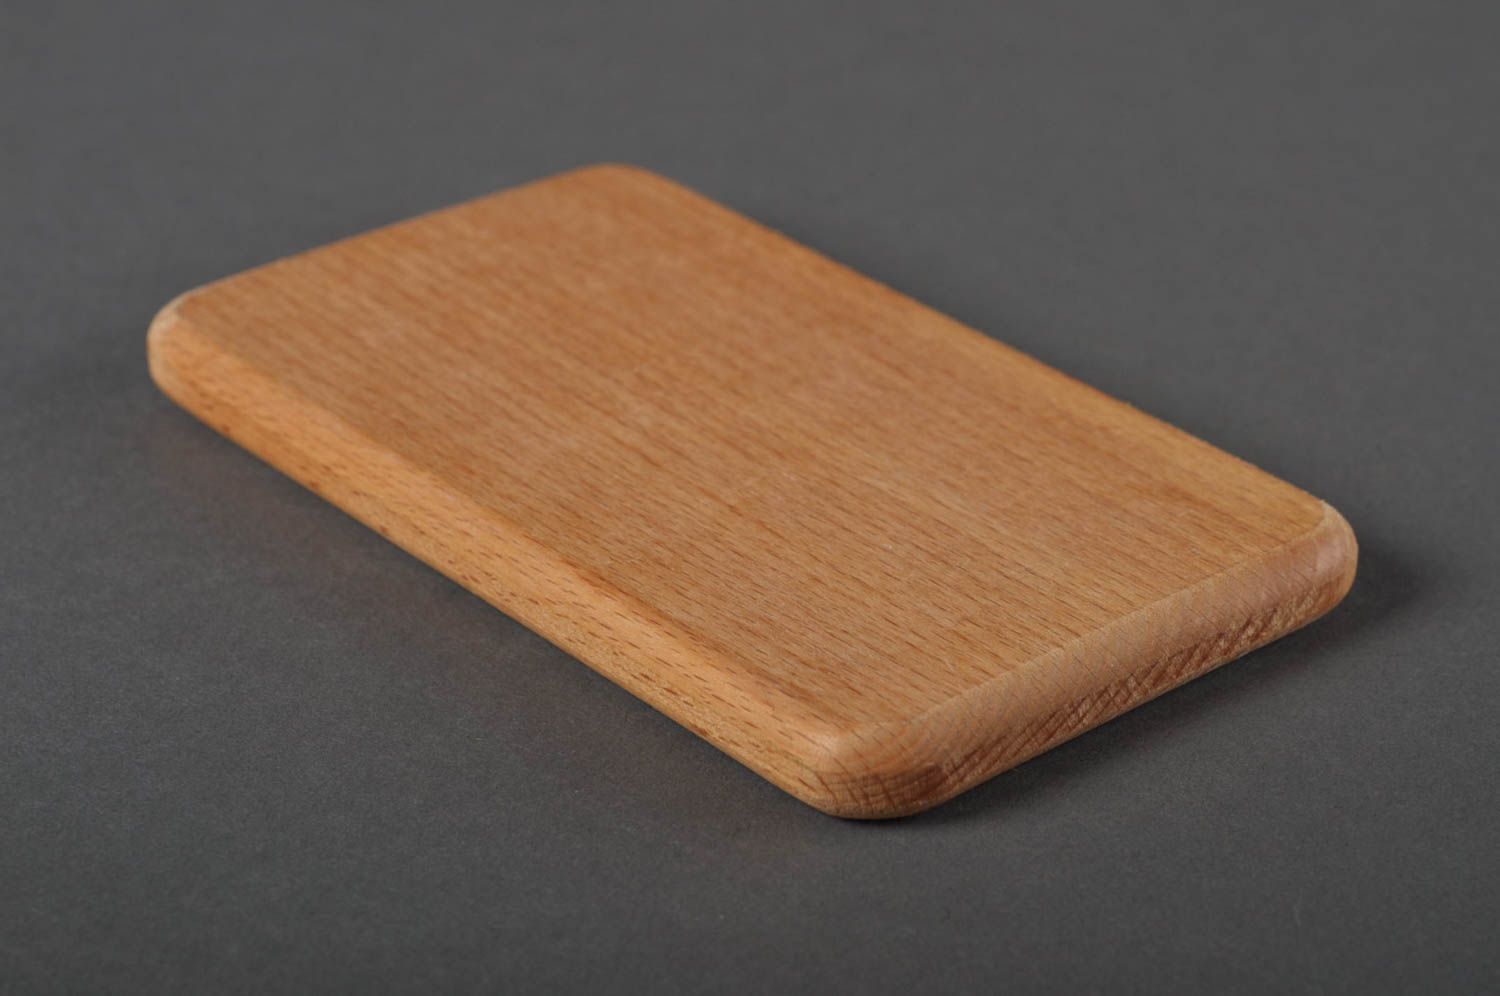 Handmade wooden chopping board kitchen supplies woodwork ideas small gifts photo 2